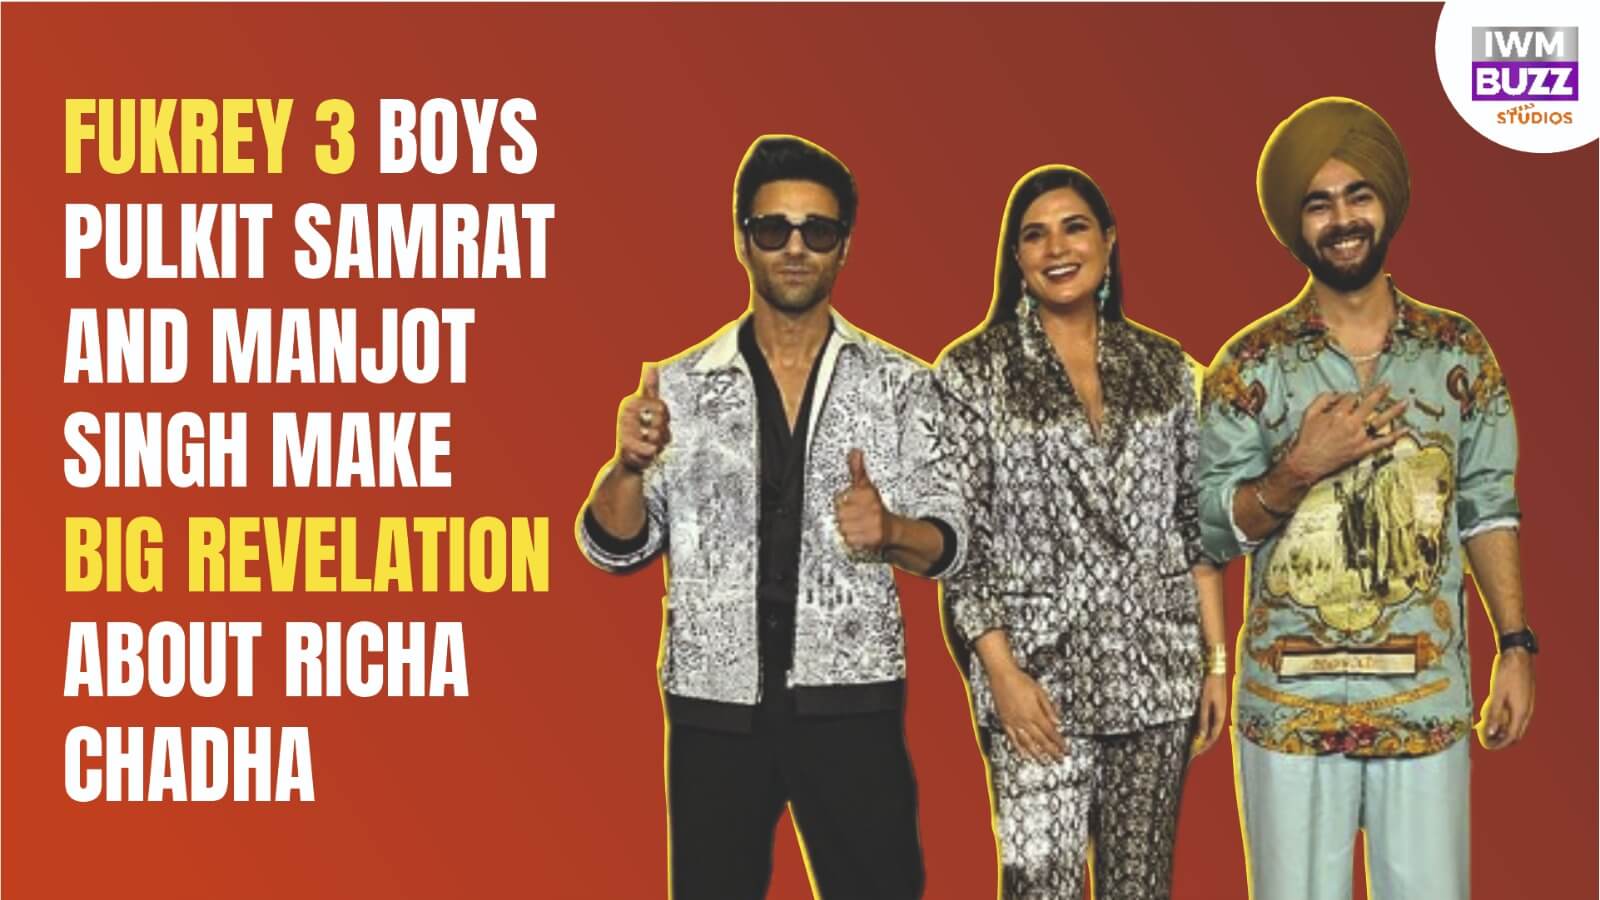 Exclusive Interview: Pulkit Samrat, Richa Chadha and Manjot Singh on Fukrey being a brand, masti-bond on set